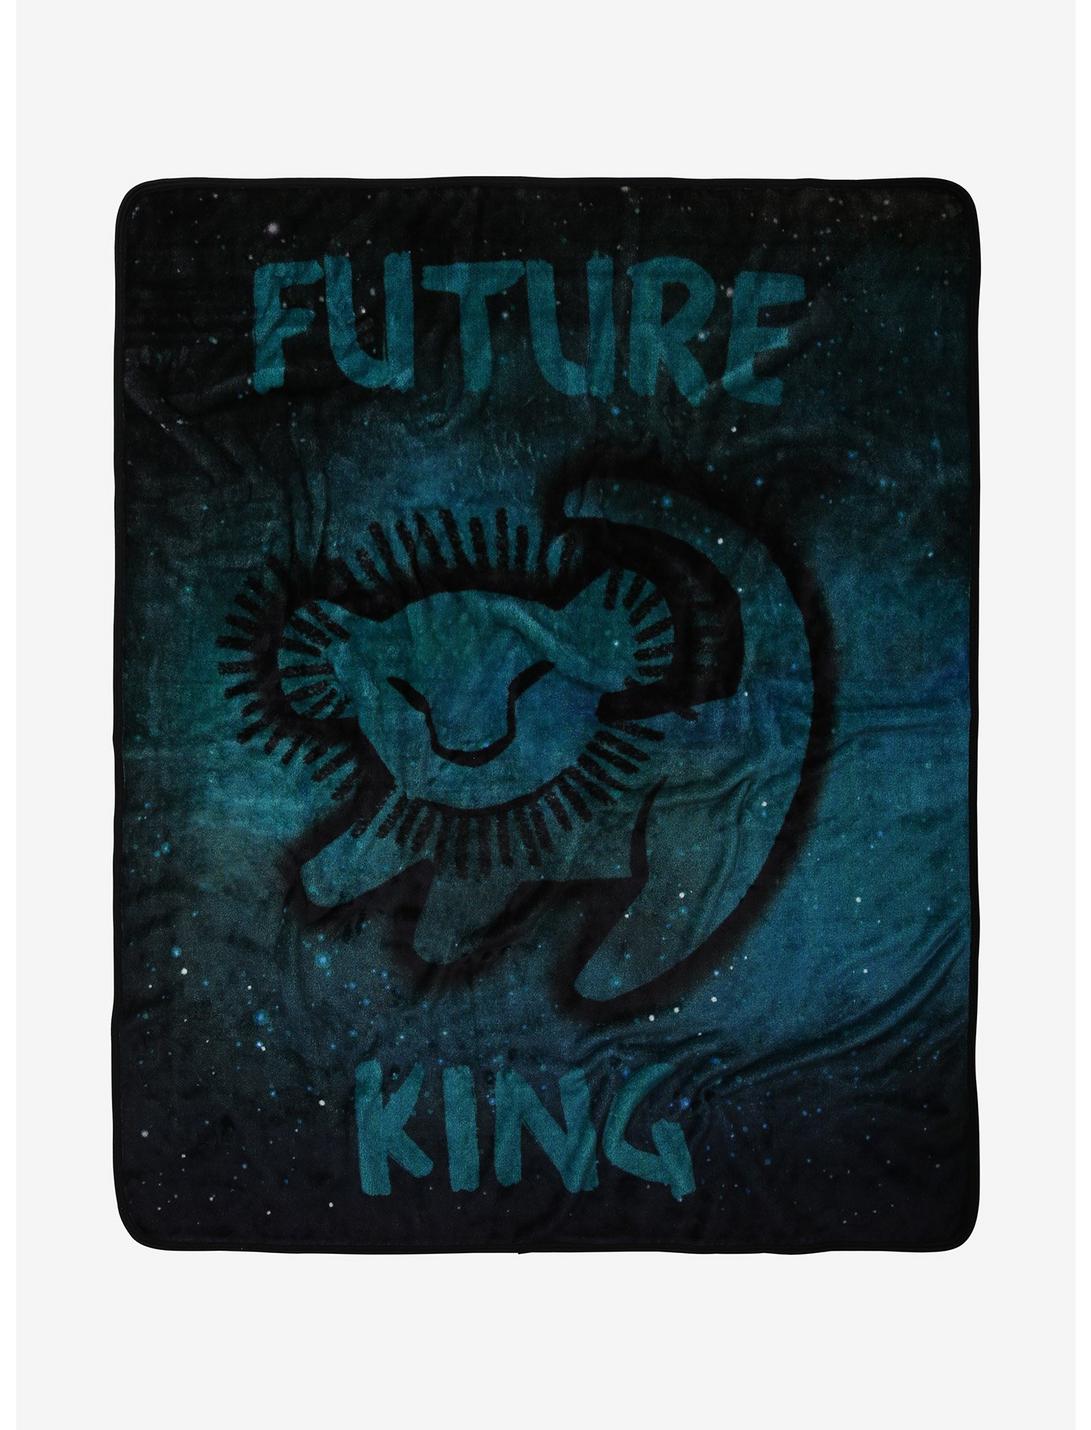 Disney The Lion King Future King Teal Plush Throw Blanket, , hi-res